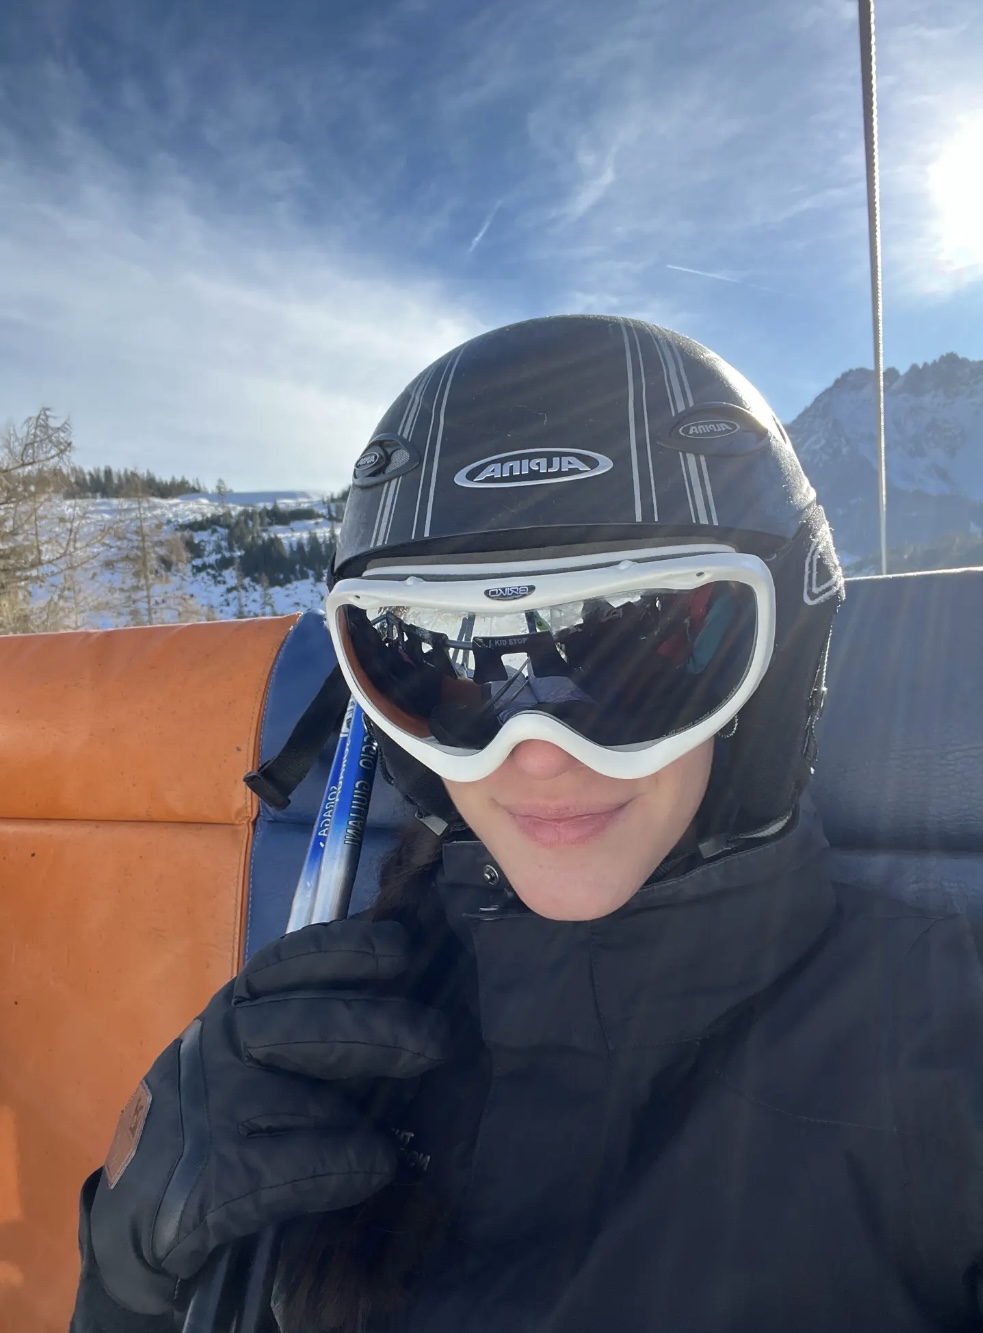 Aurora Perea on a ski lift.